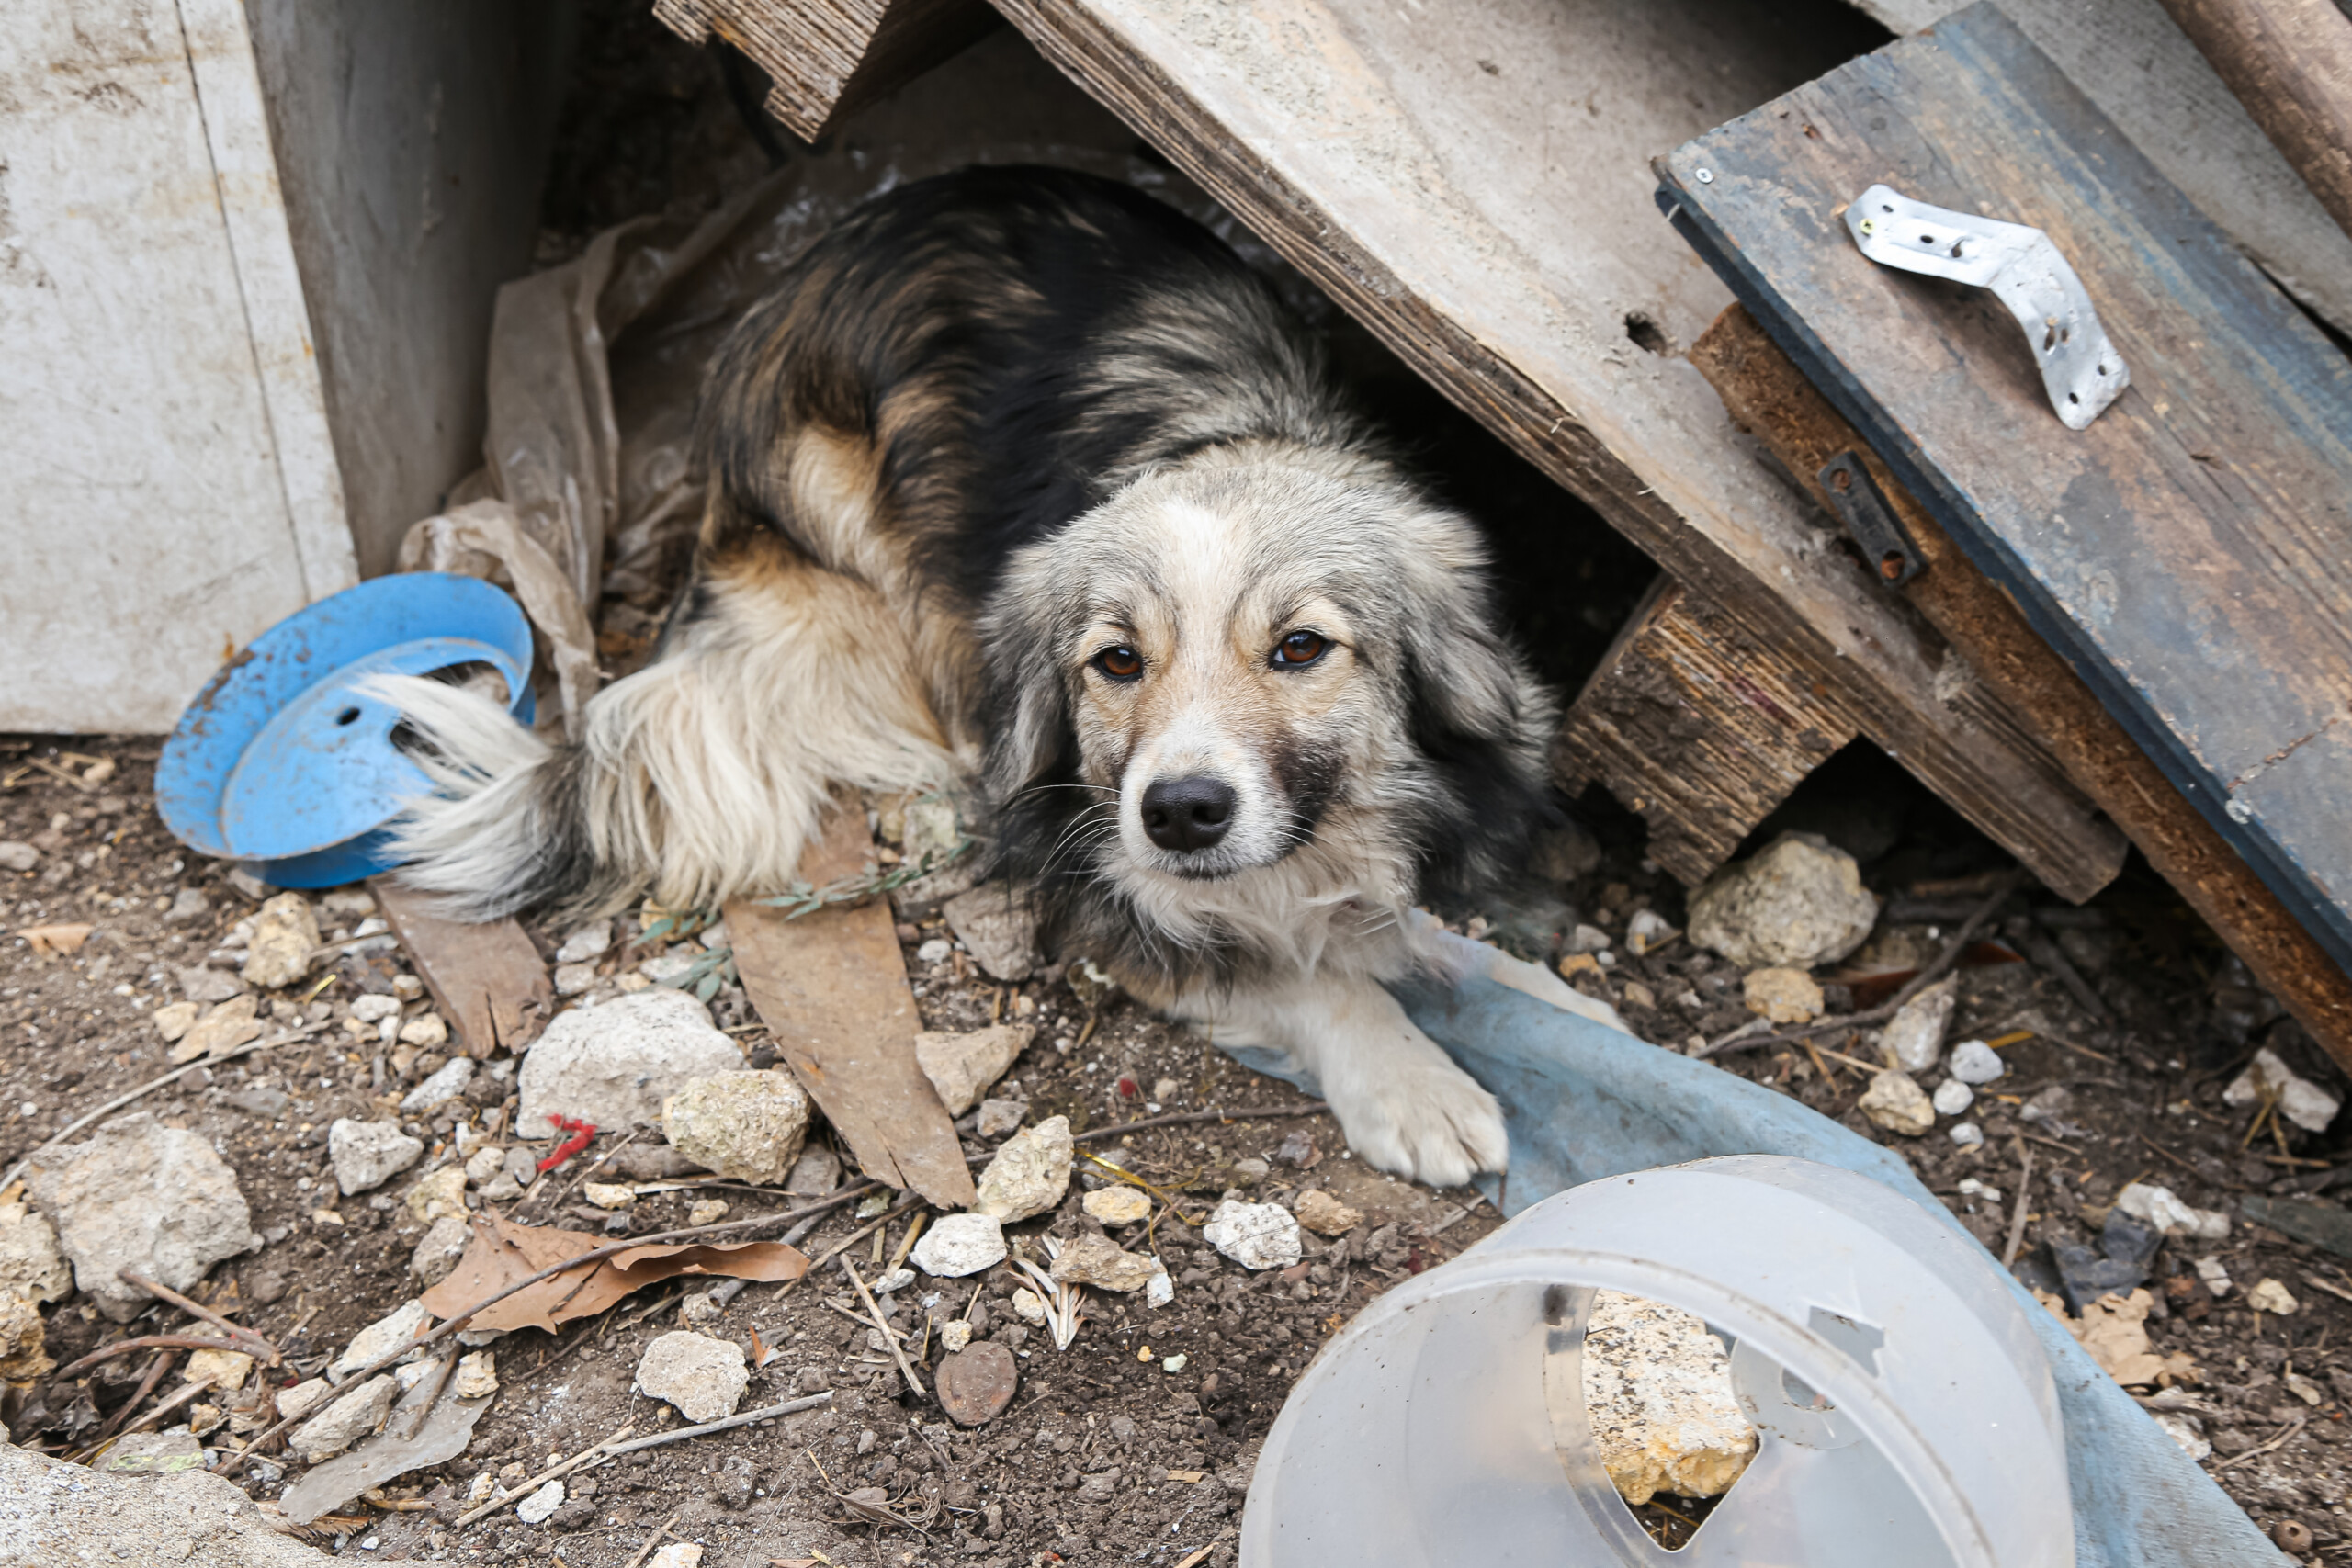 stray dog wooden planks abandoned area with sad eyes animal welfare social photo scaled